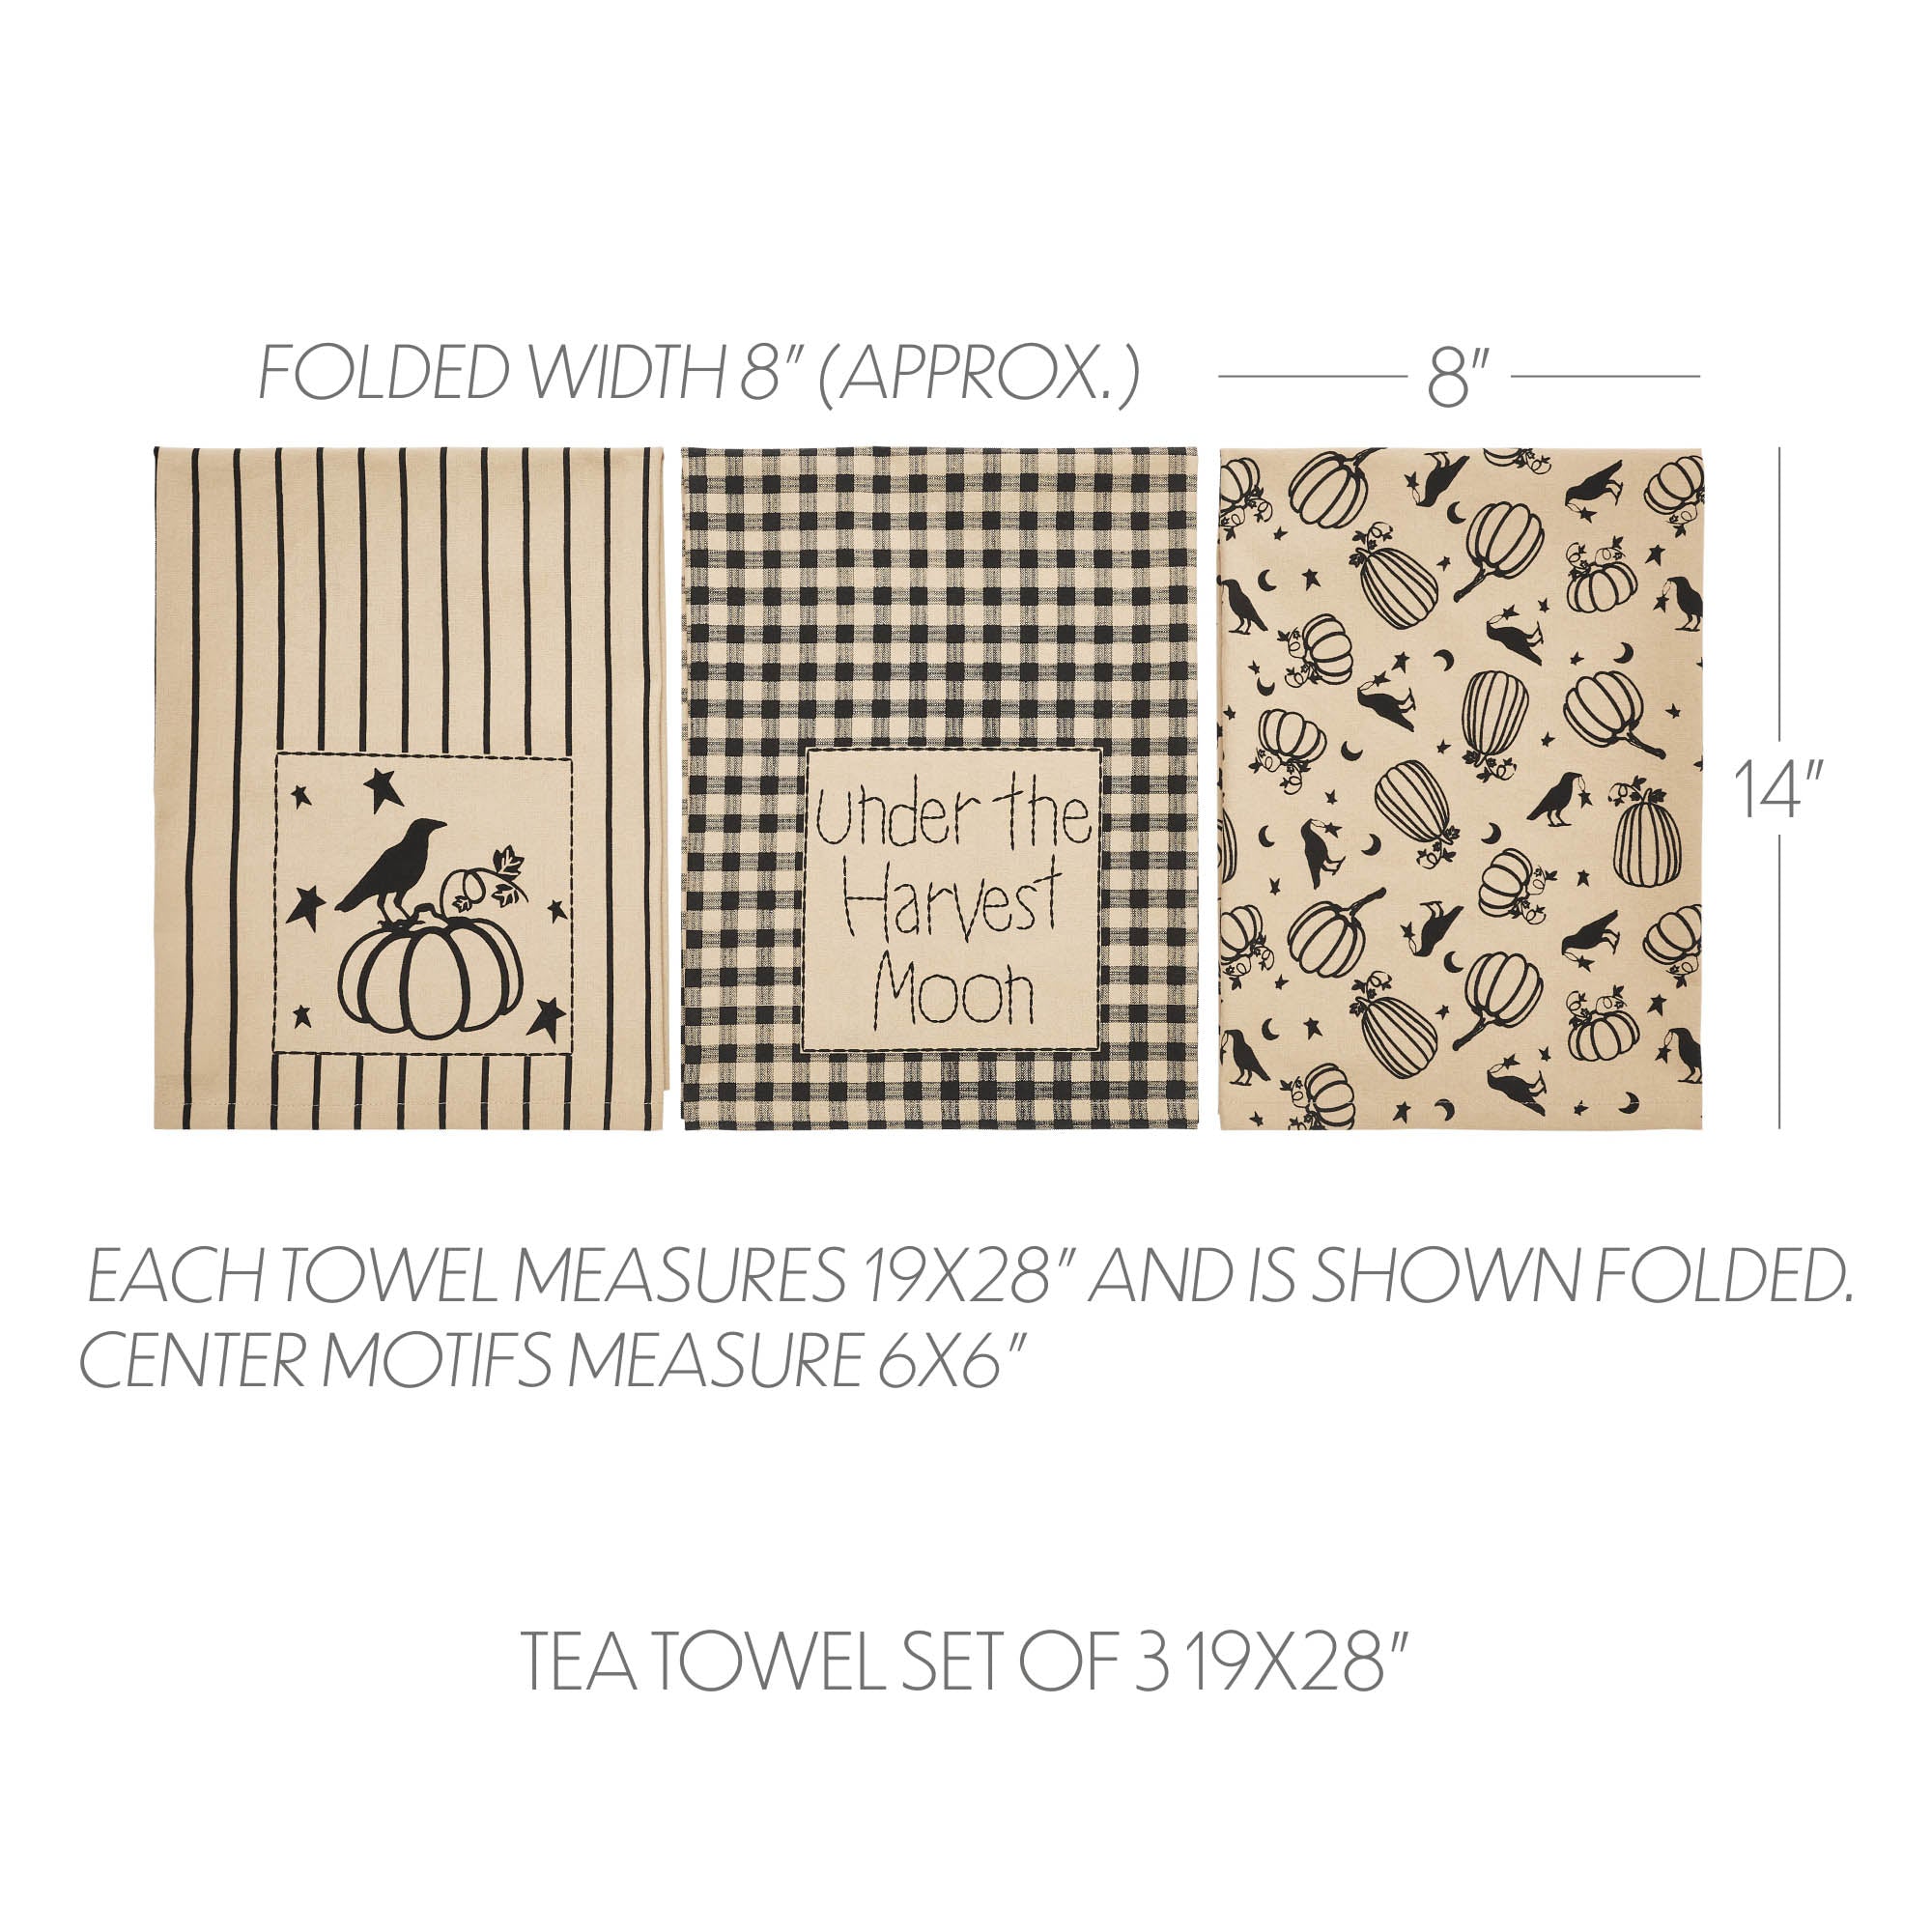 Raven Tea Towel | Geometry